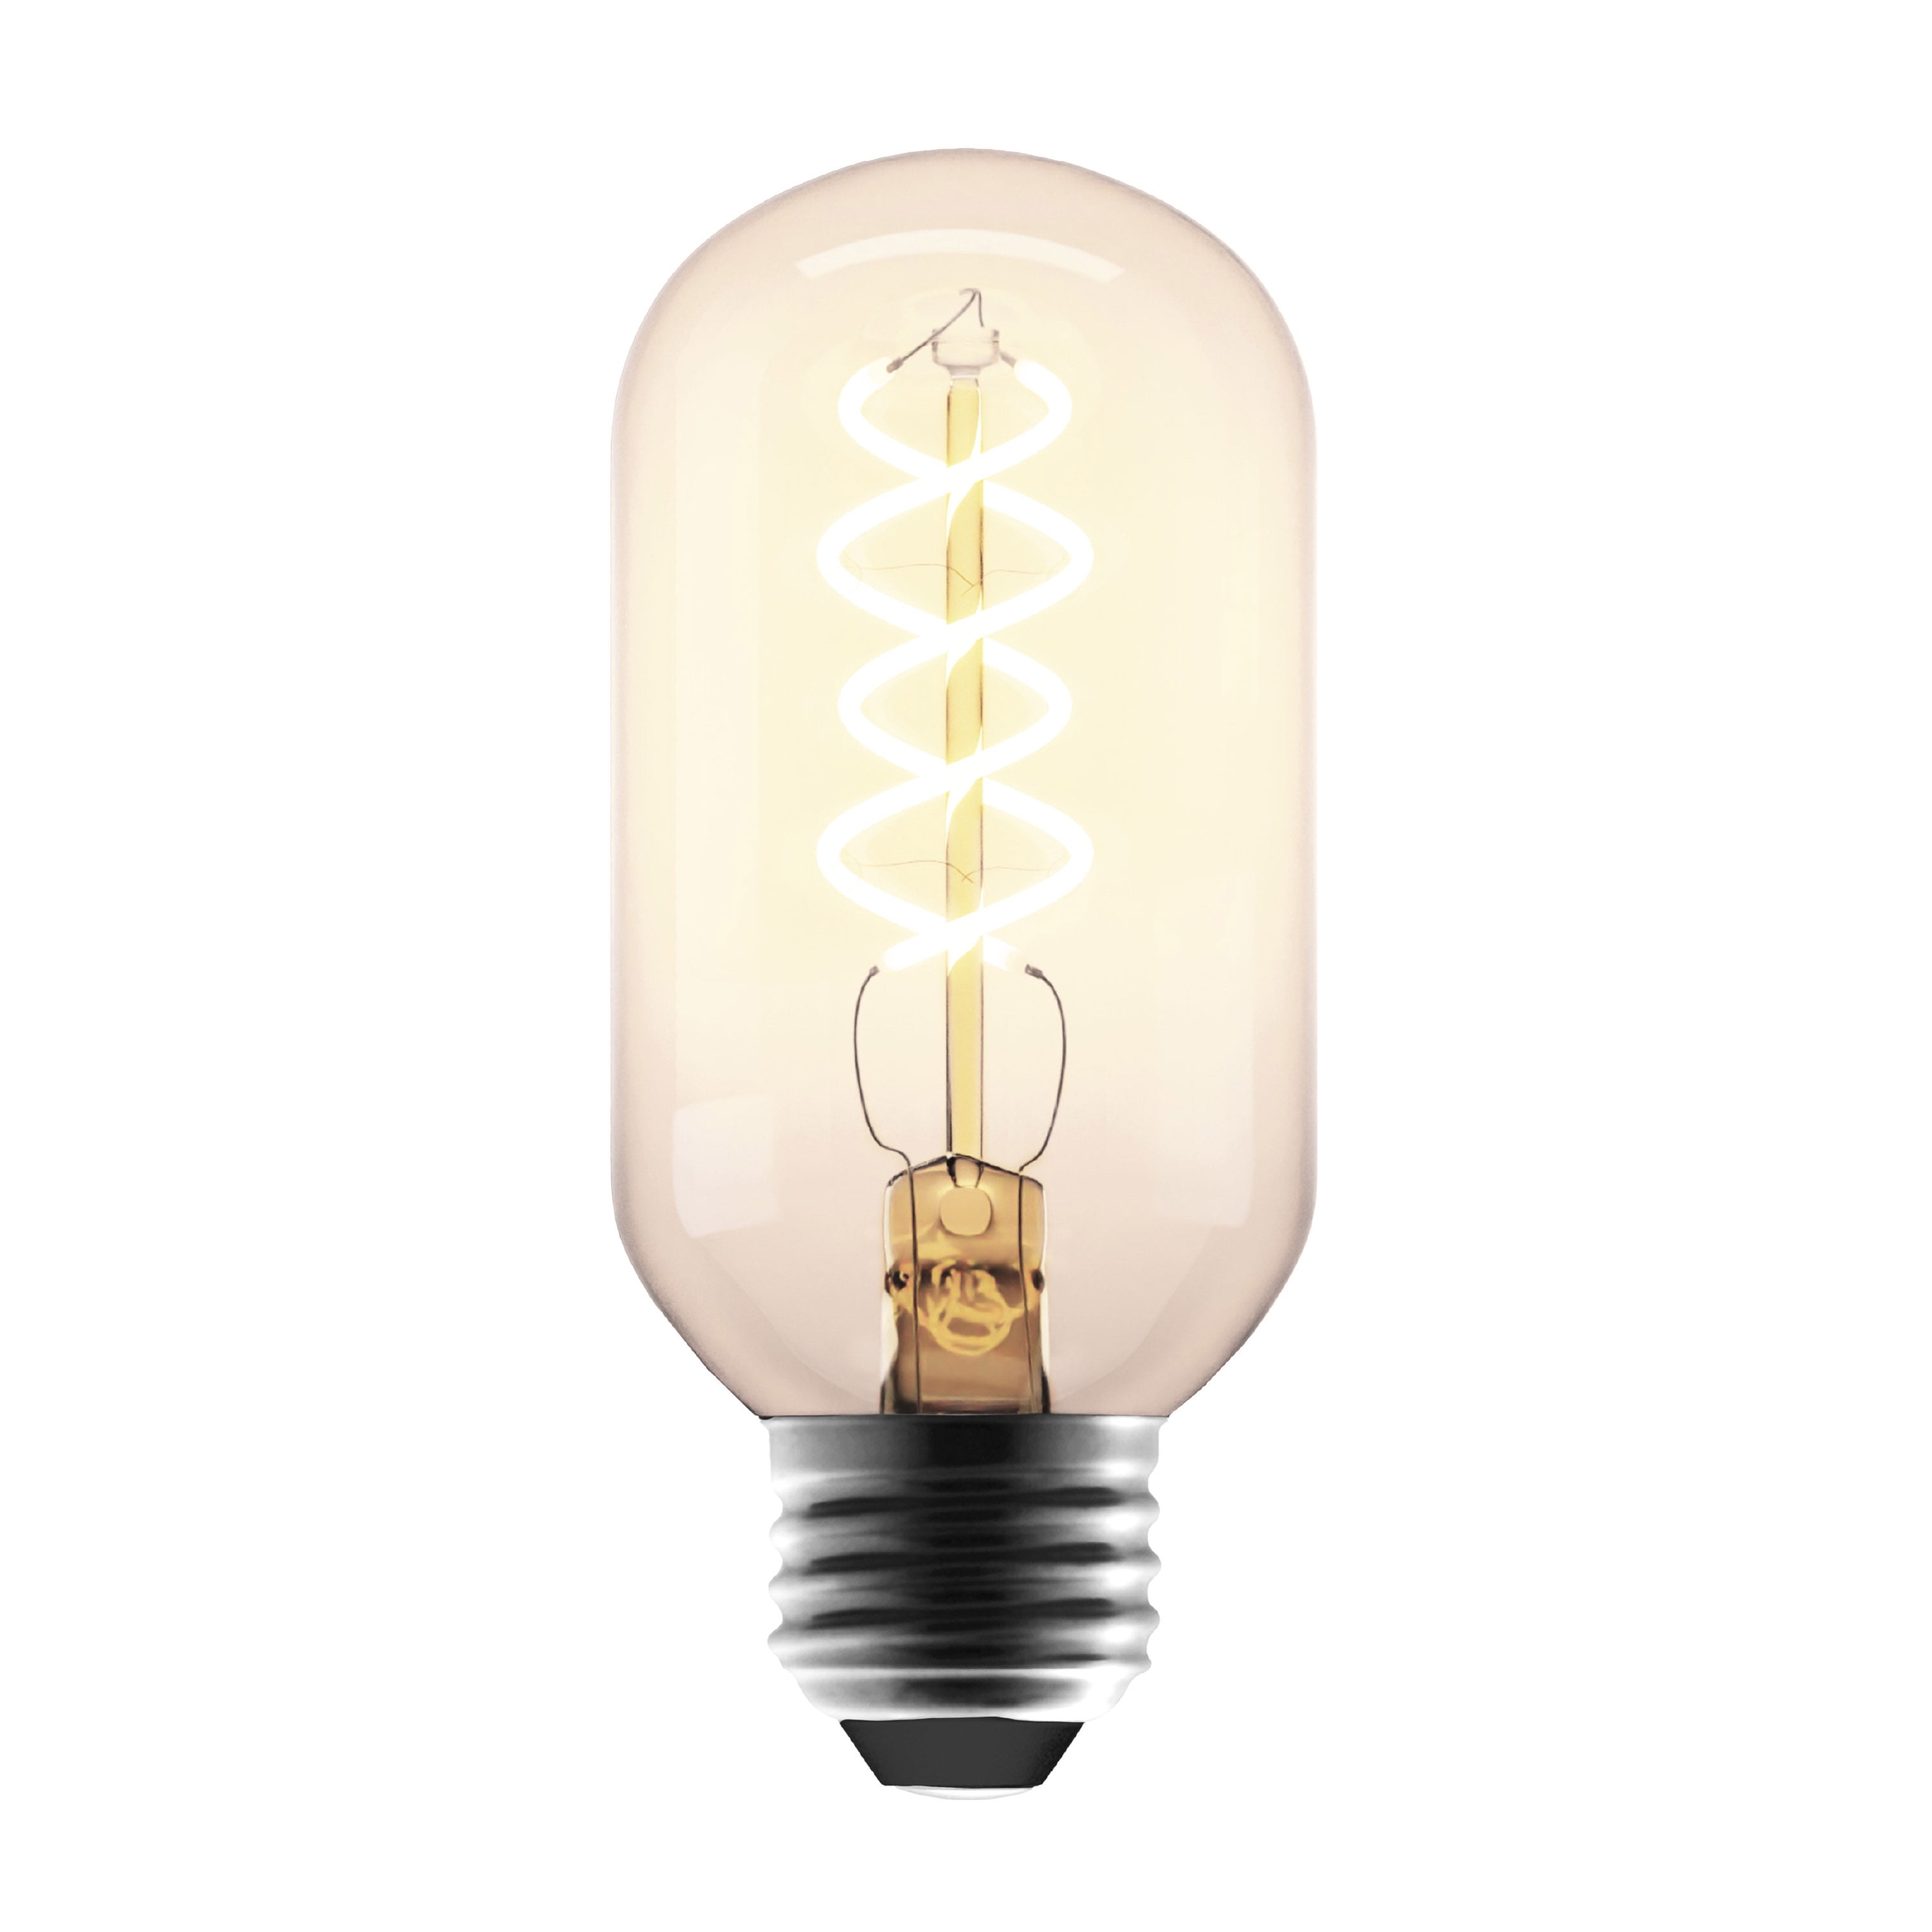 Better Homes & Gardens LED Vintage Style Light Bulb, T45 40 watts Soft White Spiral Filament, Medium Base, Dimmable, 2 Pack